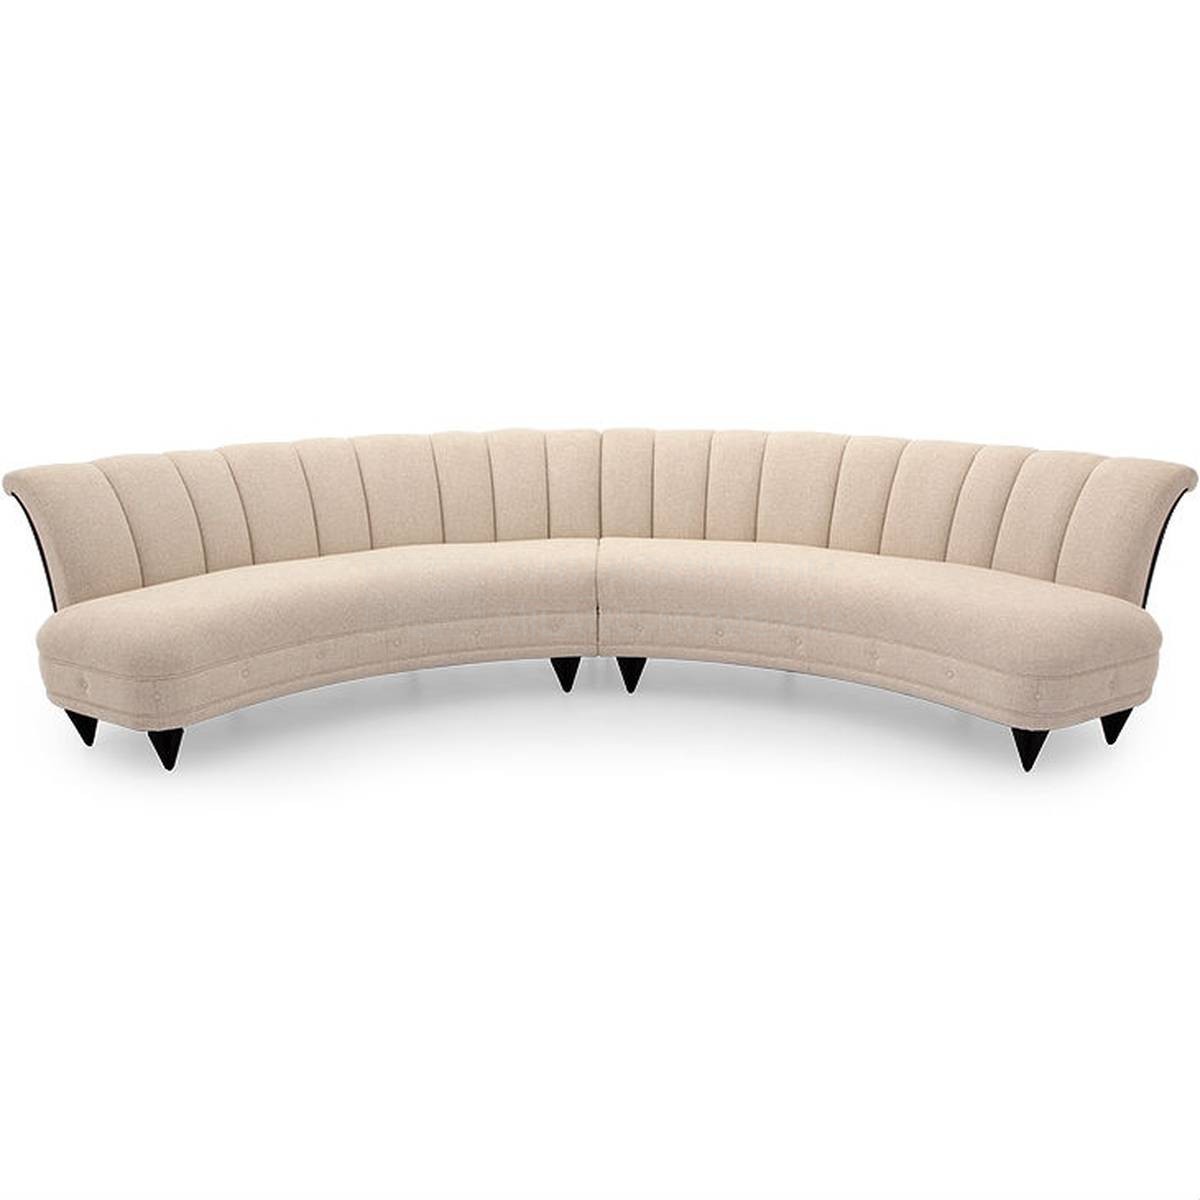 Круглый диван Jumelle sofa из США фабрики CHRISTOPHER GUY